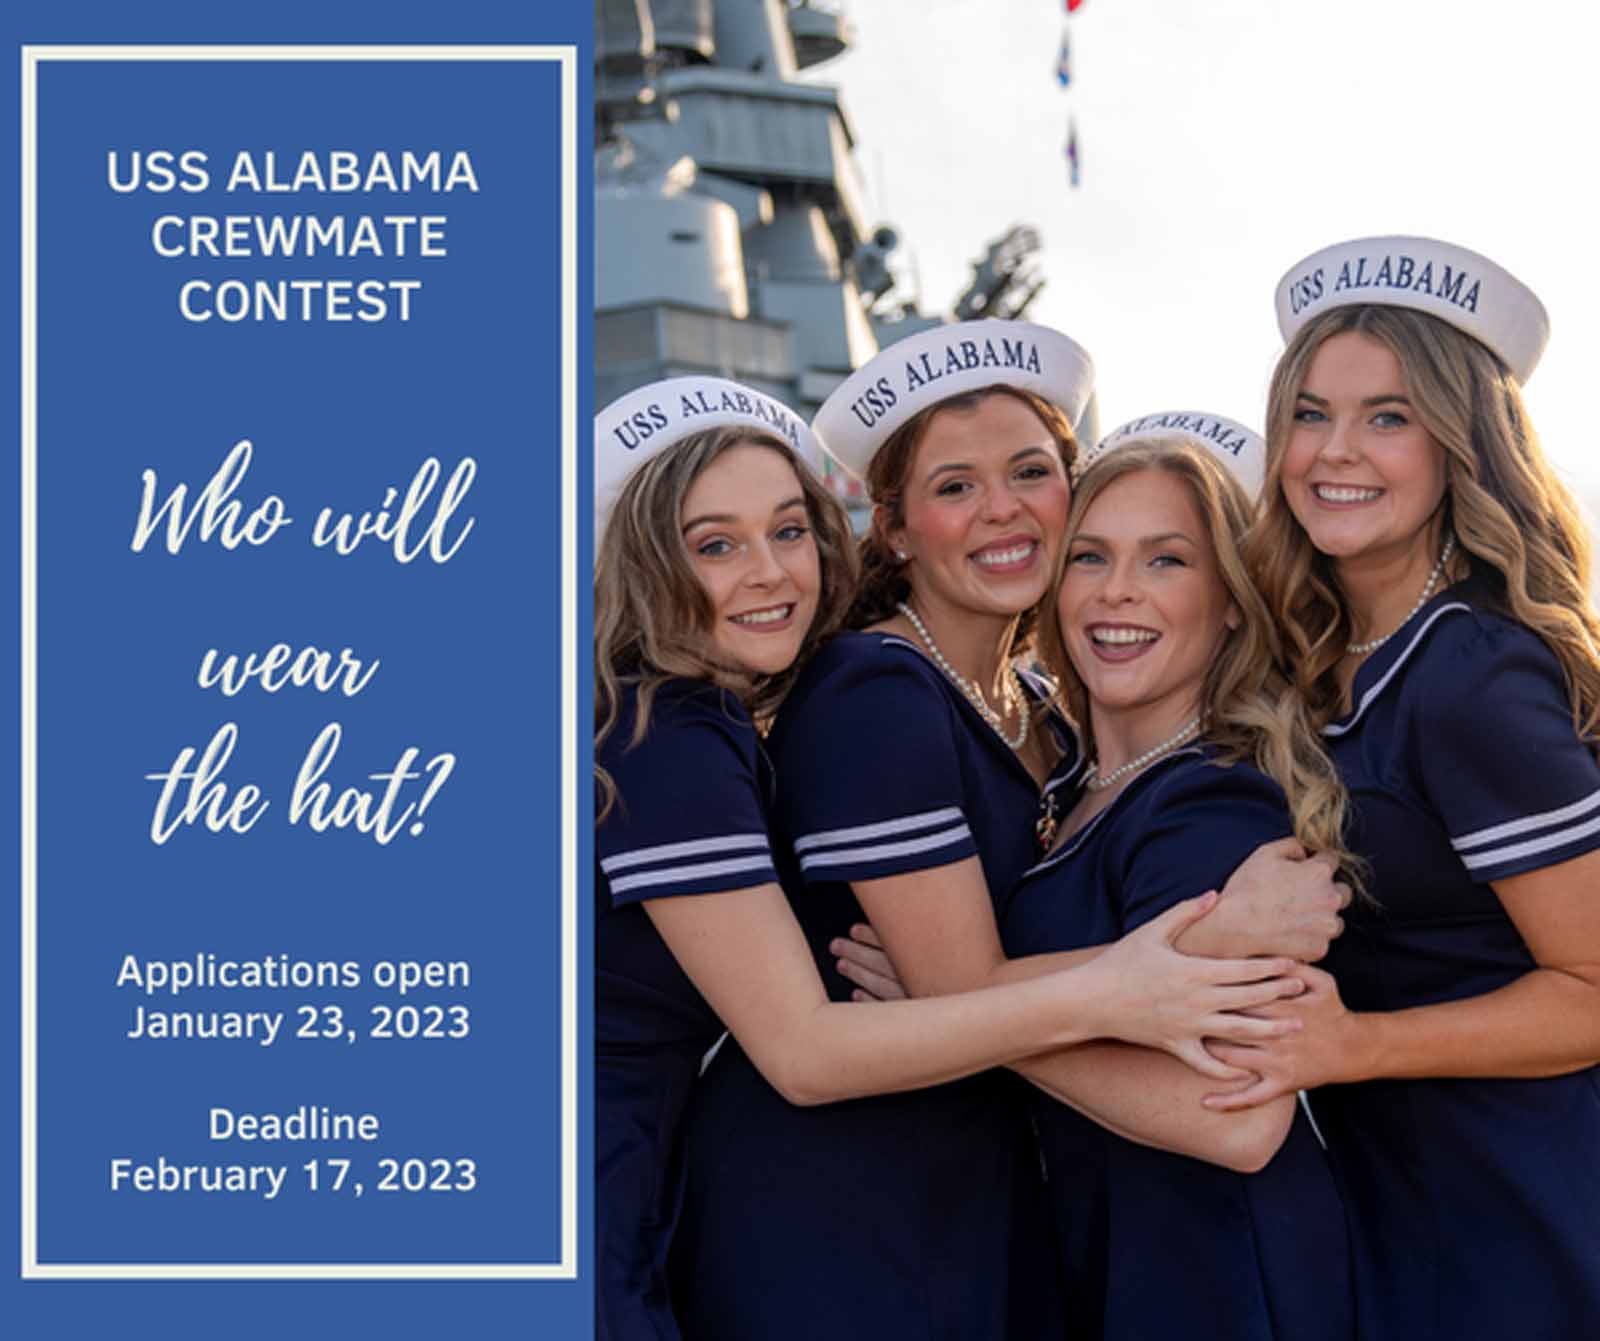 USS Alabama Crewmate Application Period Open